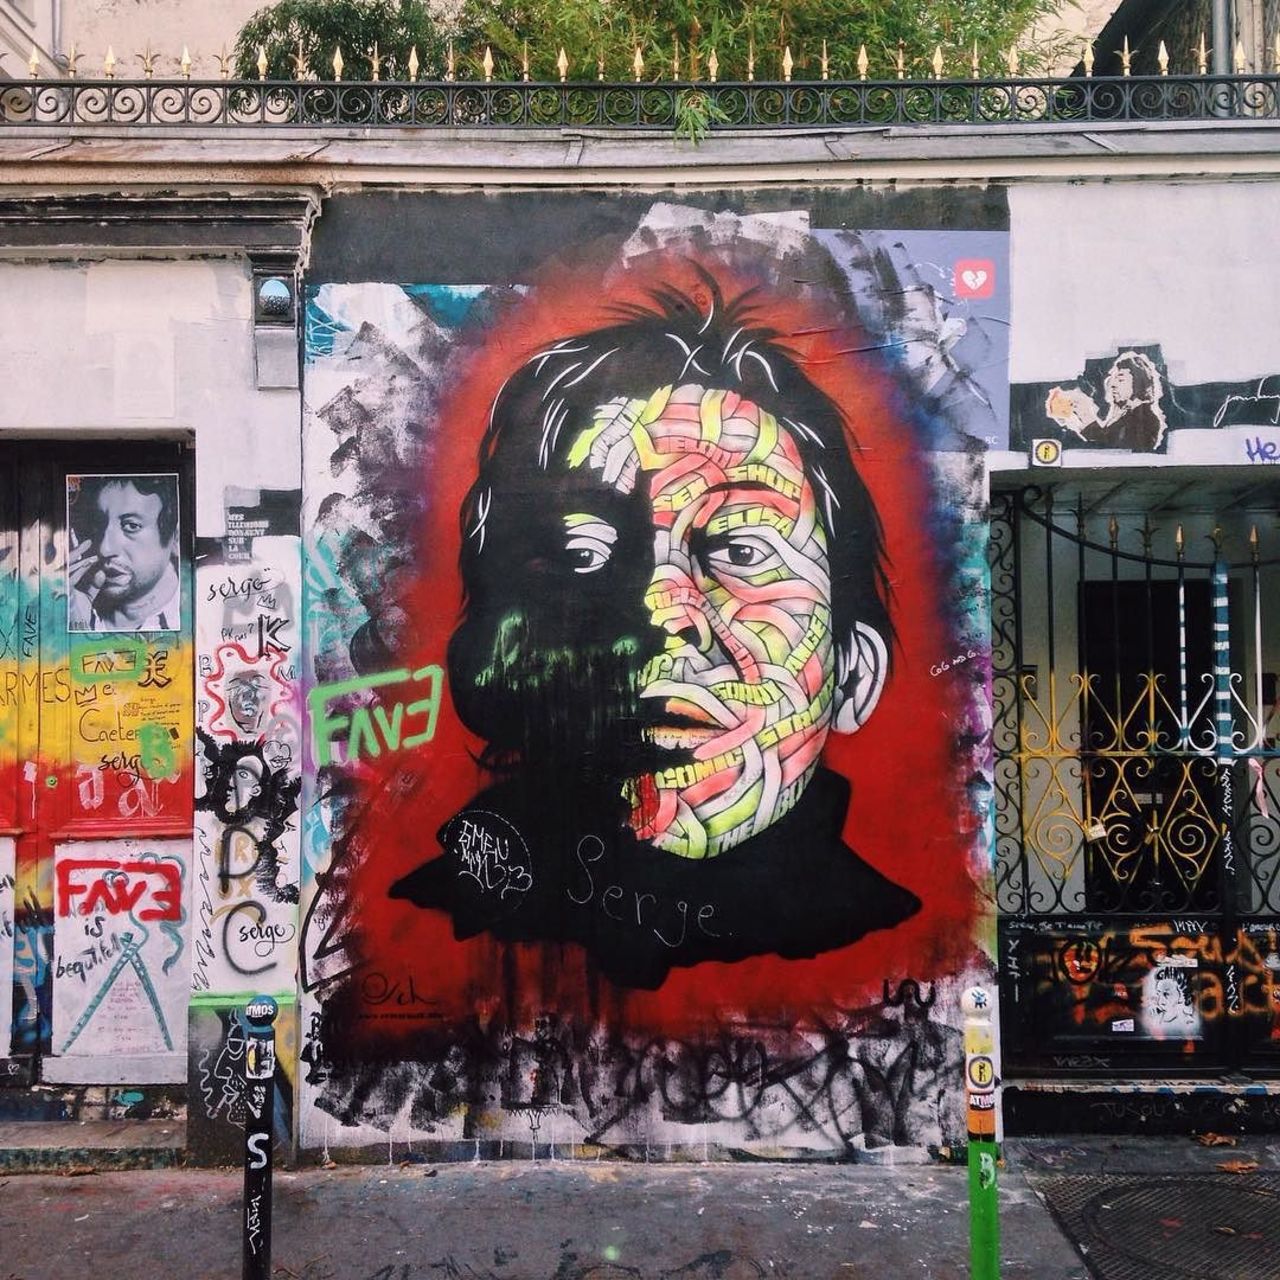 #Paris #graffiti photo by @searchfordelicious http://ift.tt/1LYn2Aj #StreetArt https://t.co/Yi8Hdp32ha